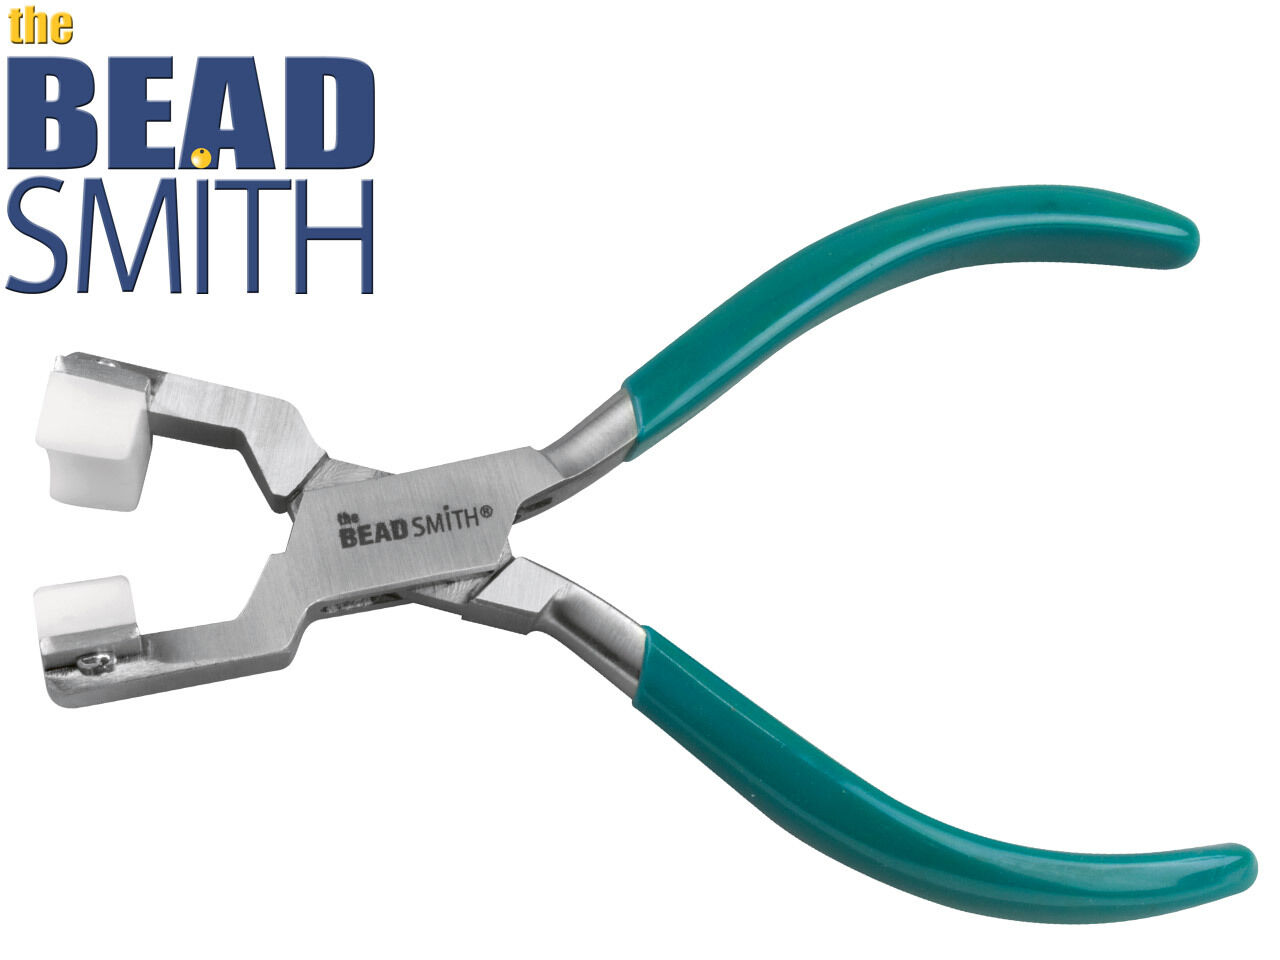 Beadsmith Bracelet Bending Pliers - Gently Curve Bracelets And Components